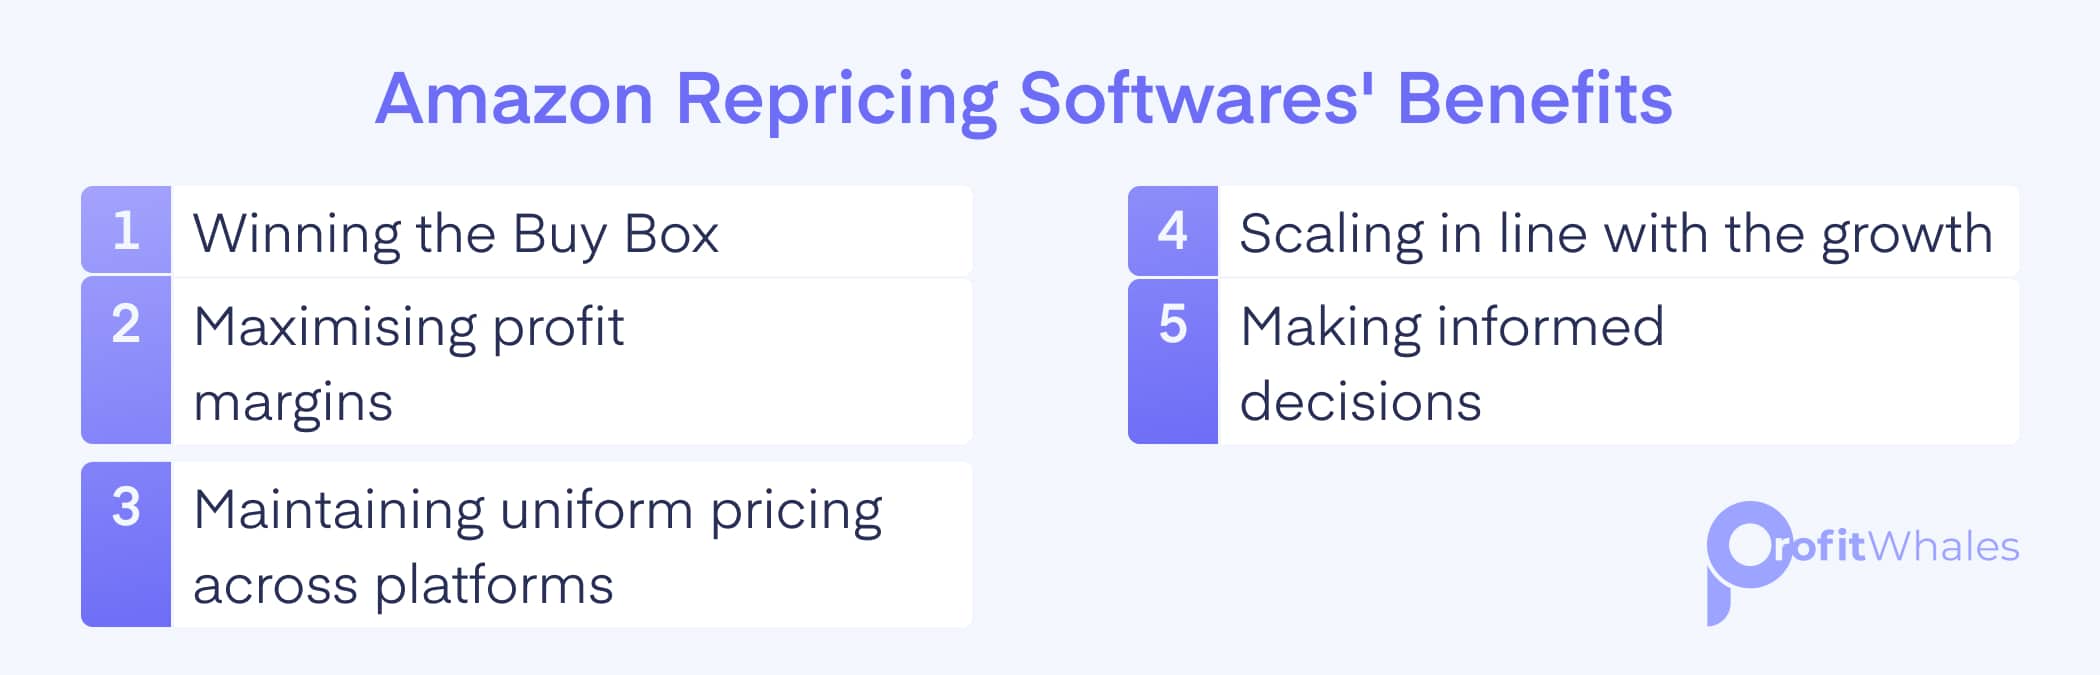 Repricing Softwares' Benefits